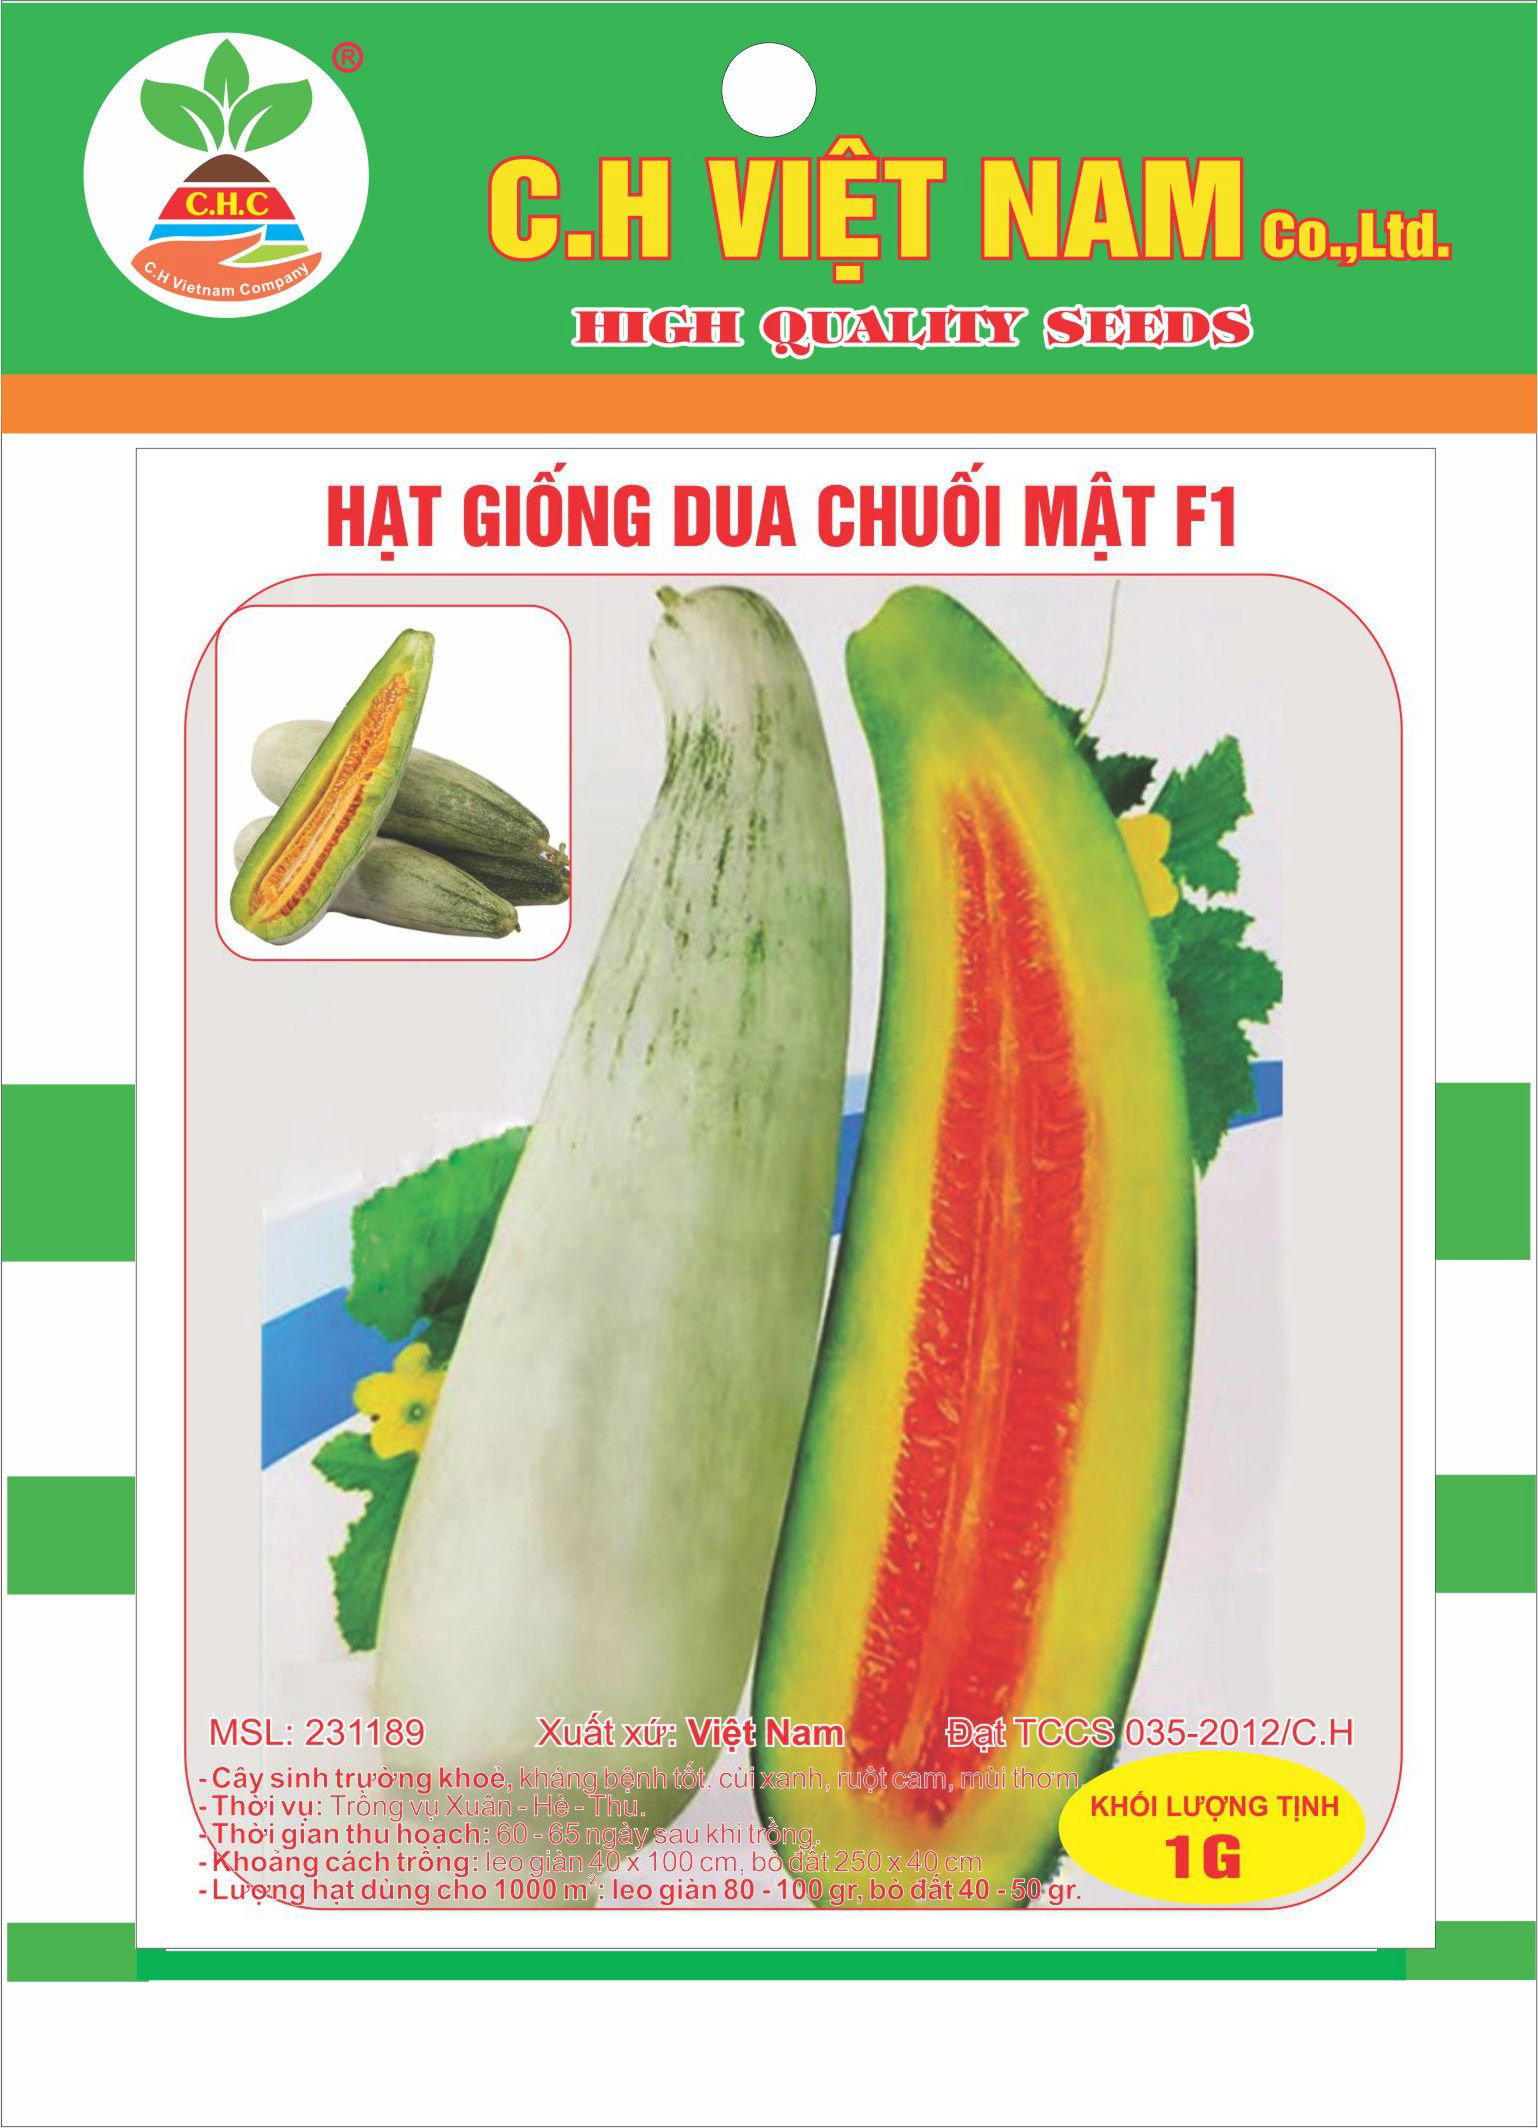 F1 Japanese banana melon seeds />
                                                 		<script>
                                                            var modal = document.getElementById(